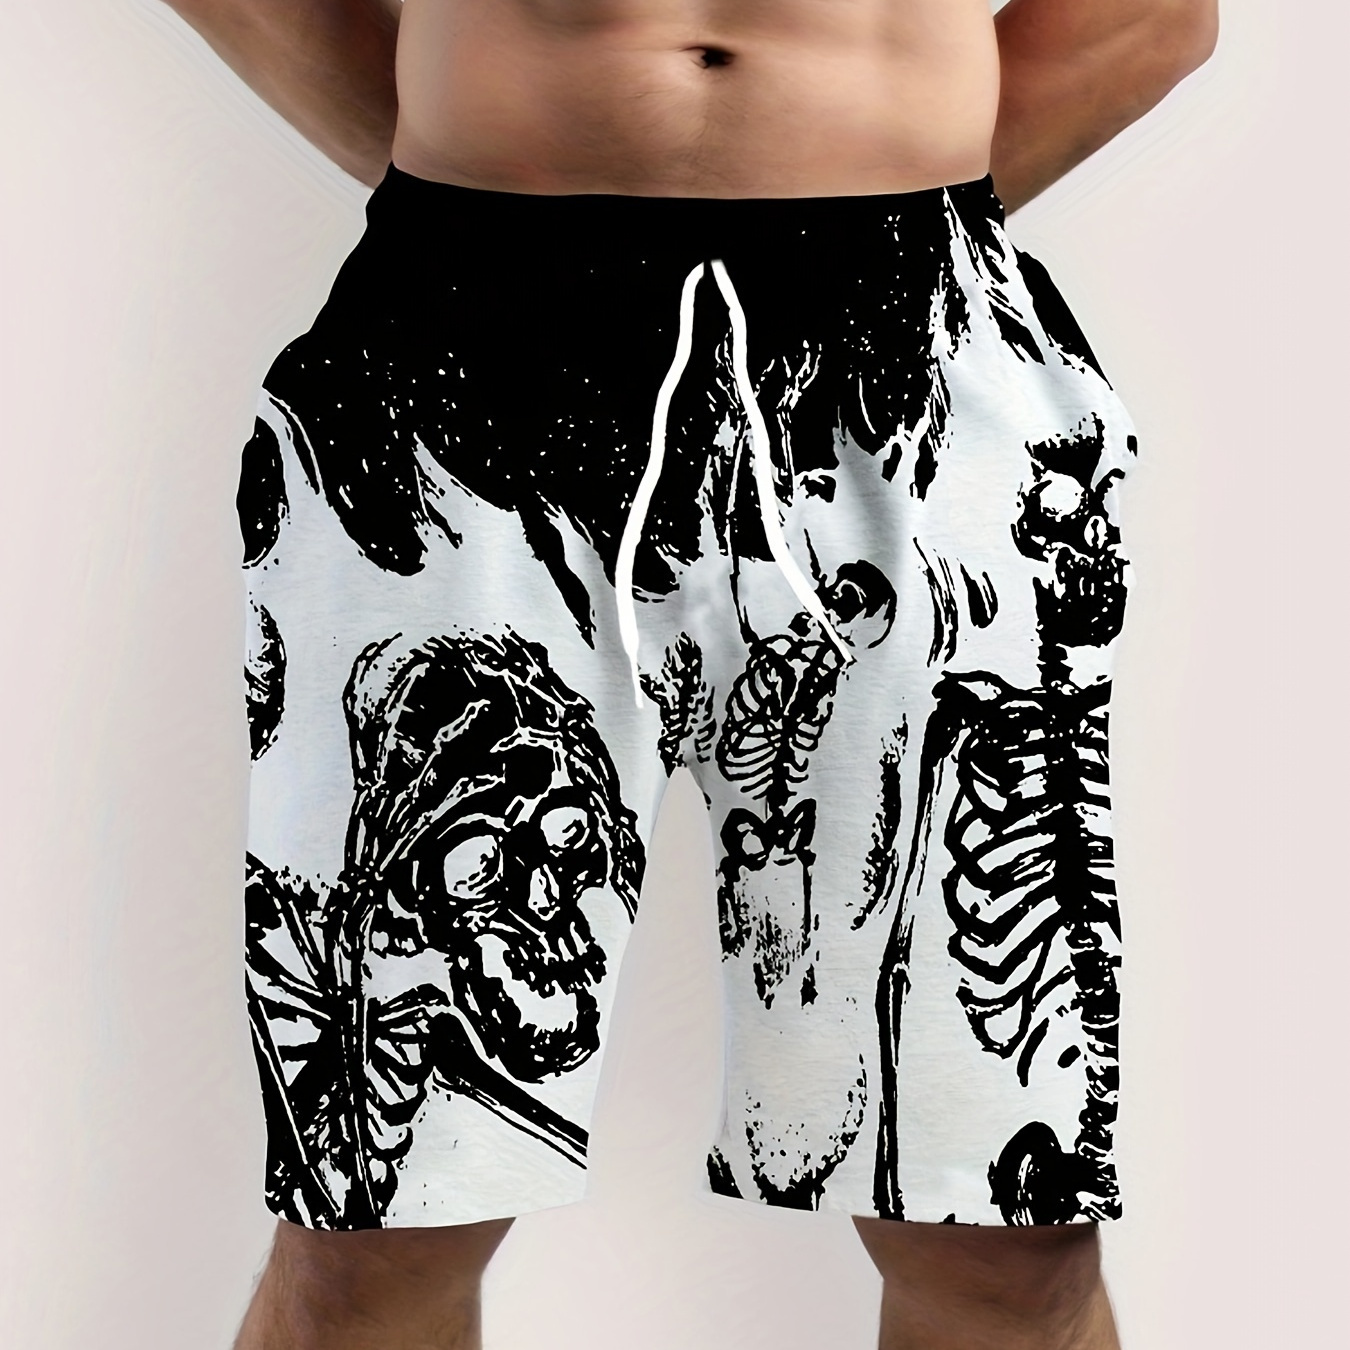 

Men's Casual Skeleton Print Active Shorts, Drawstring Beach Shorts For Summer Beach Resort